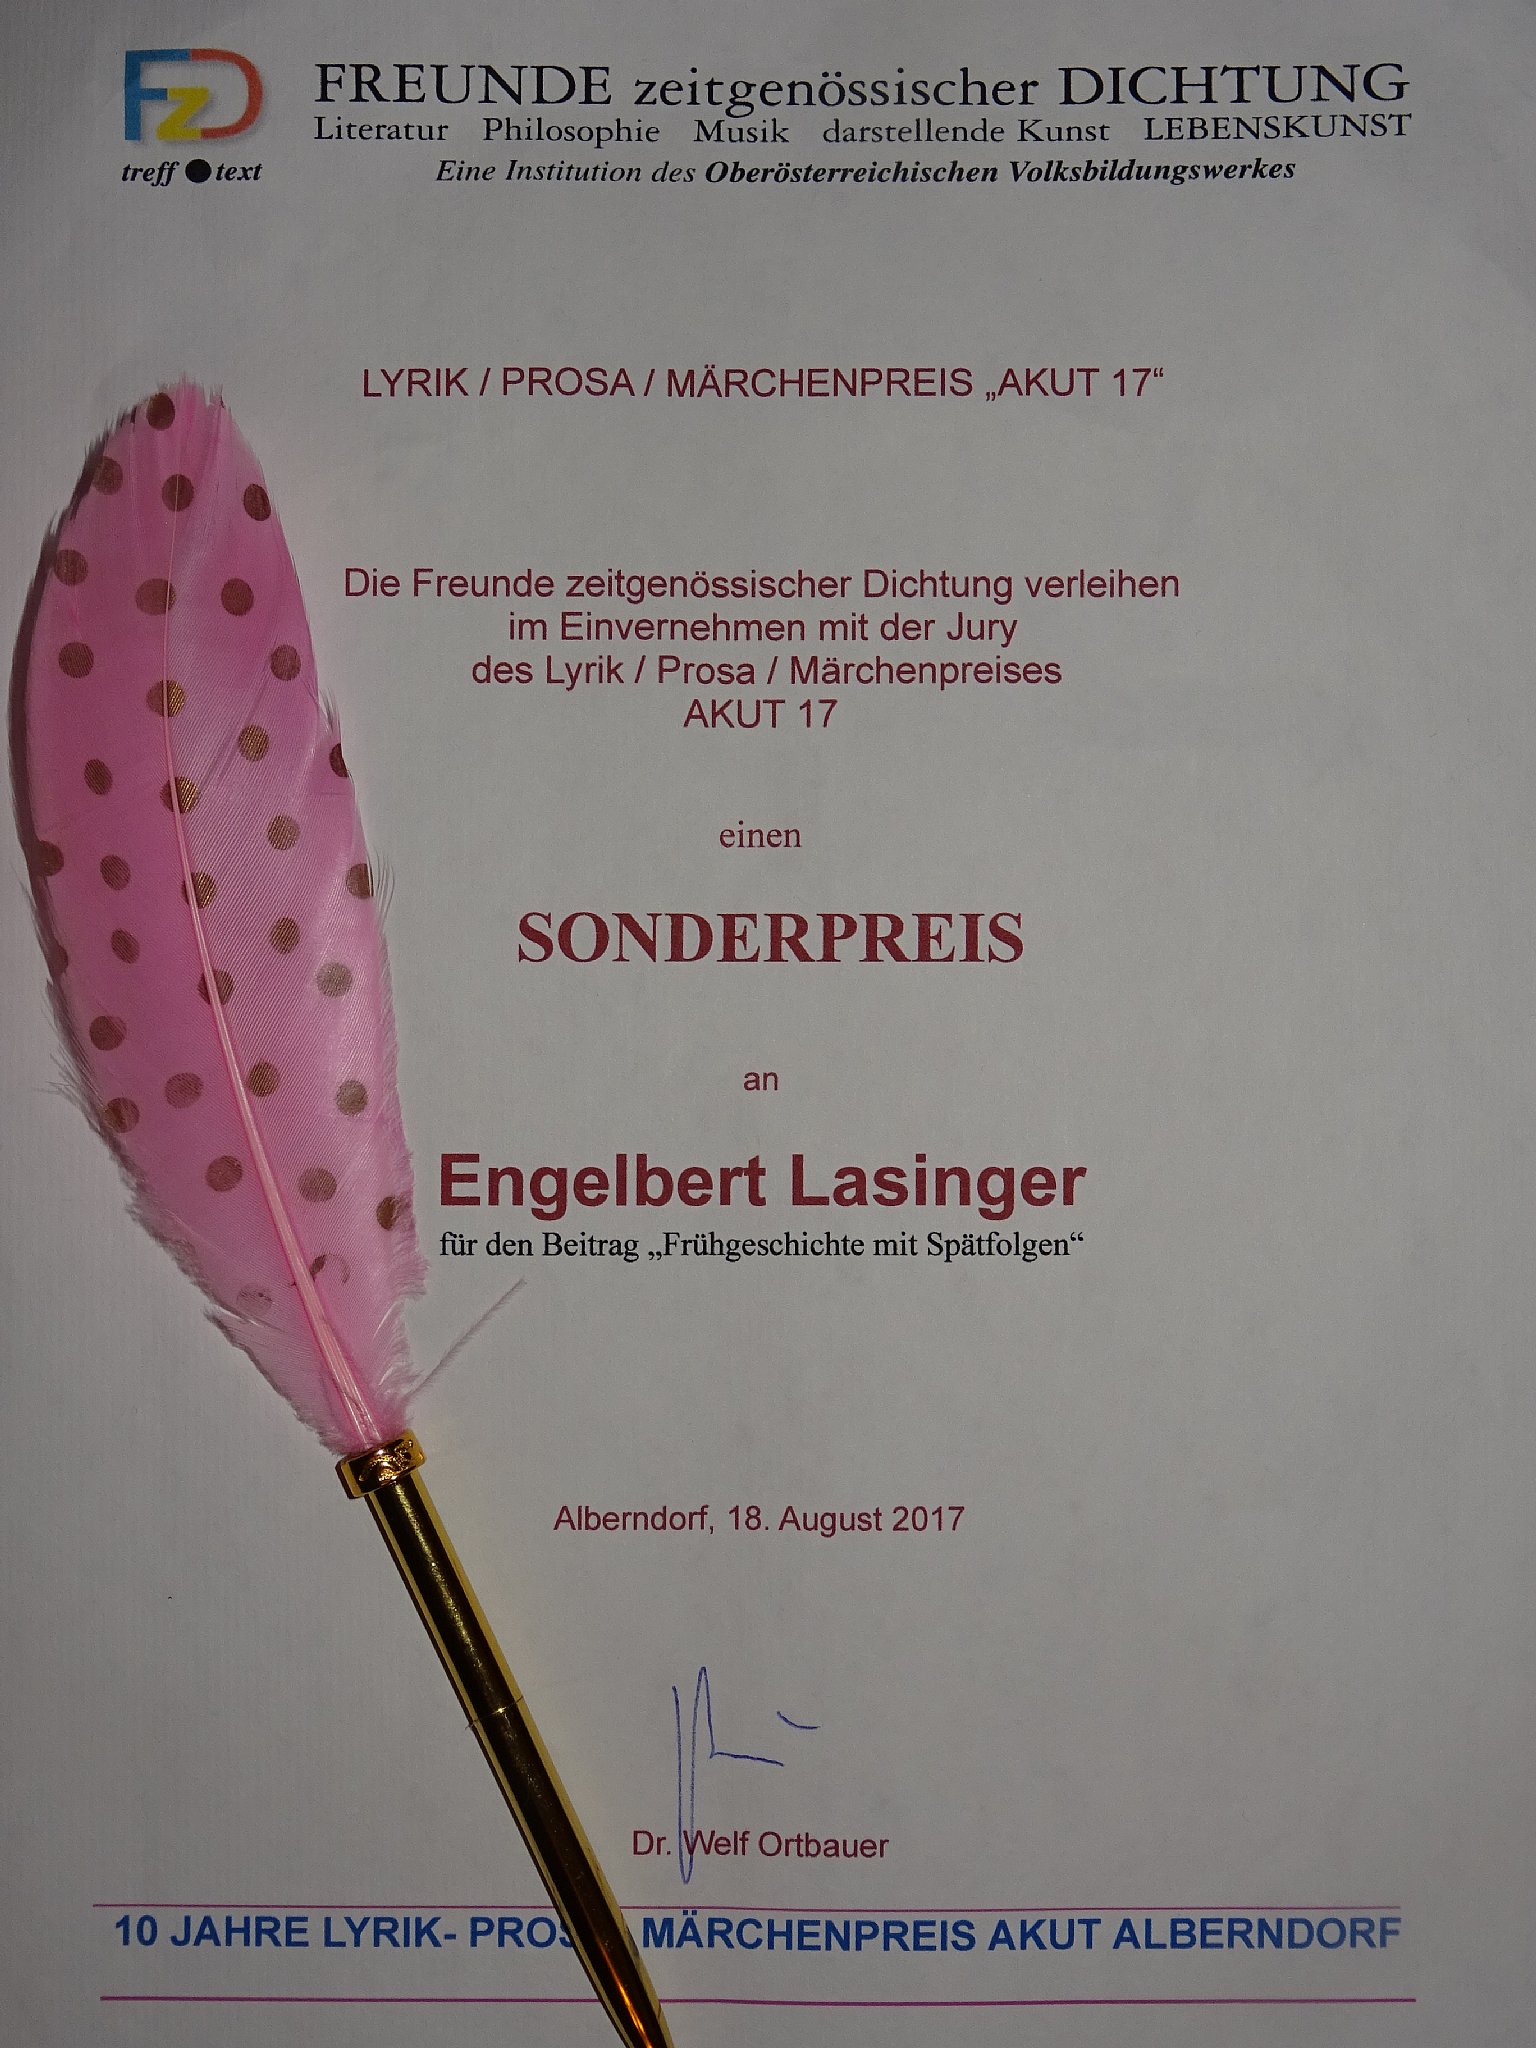 Sonderpreis für Engelbert Lasinger